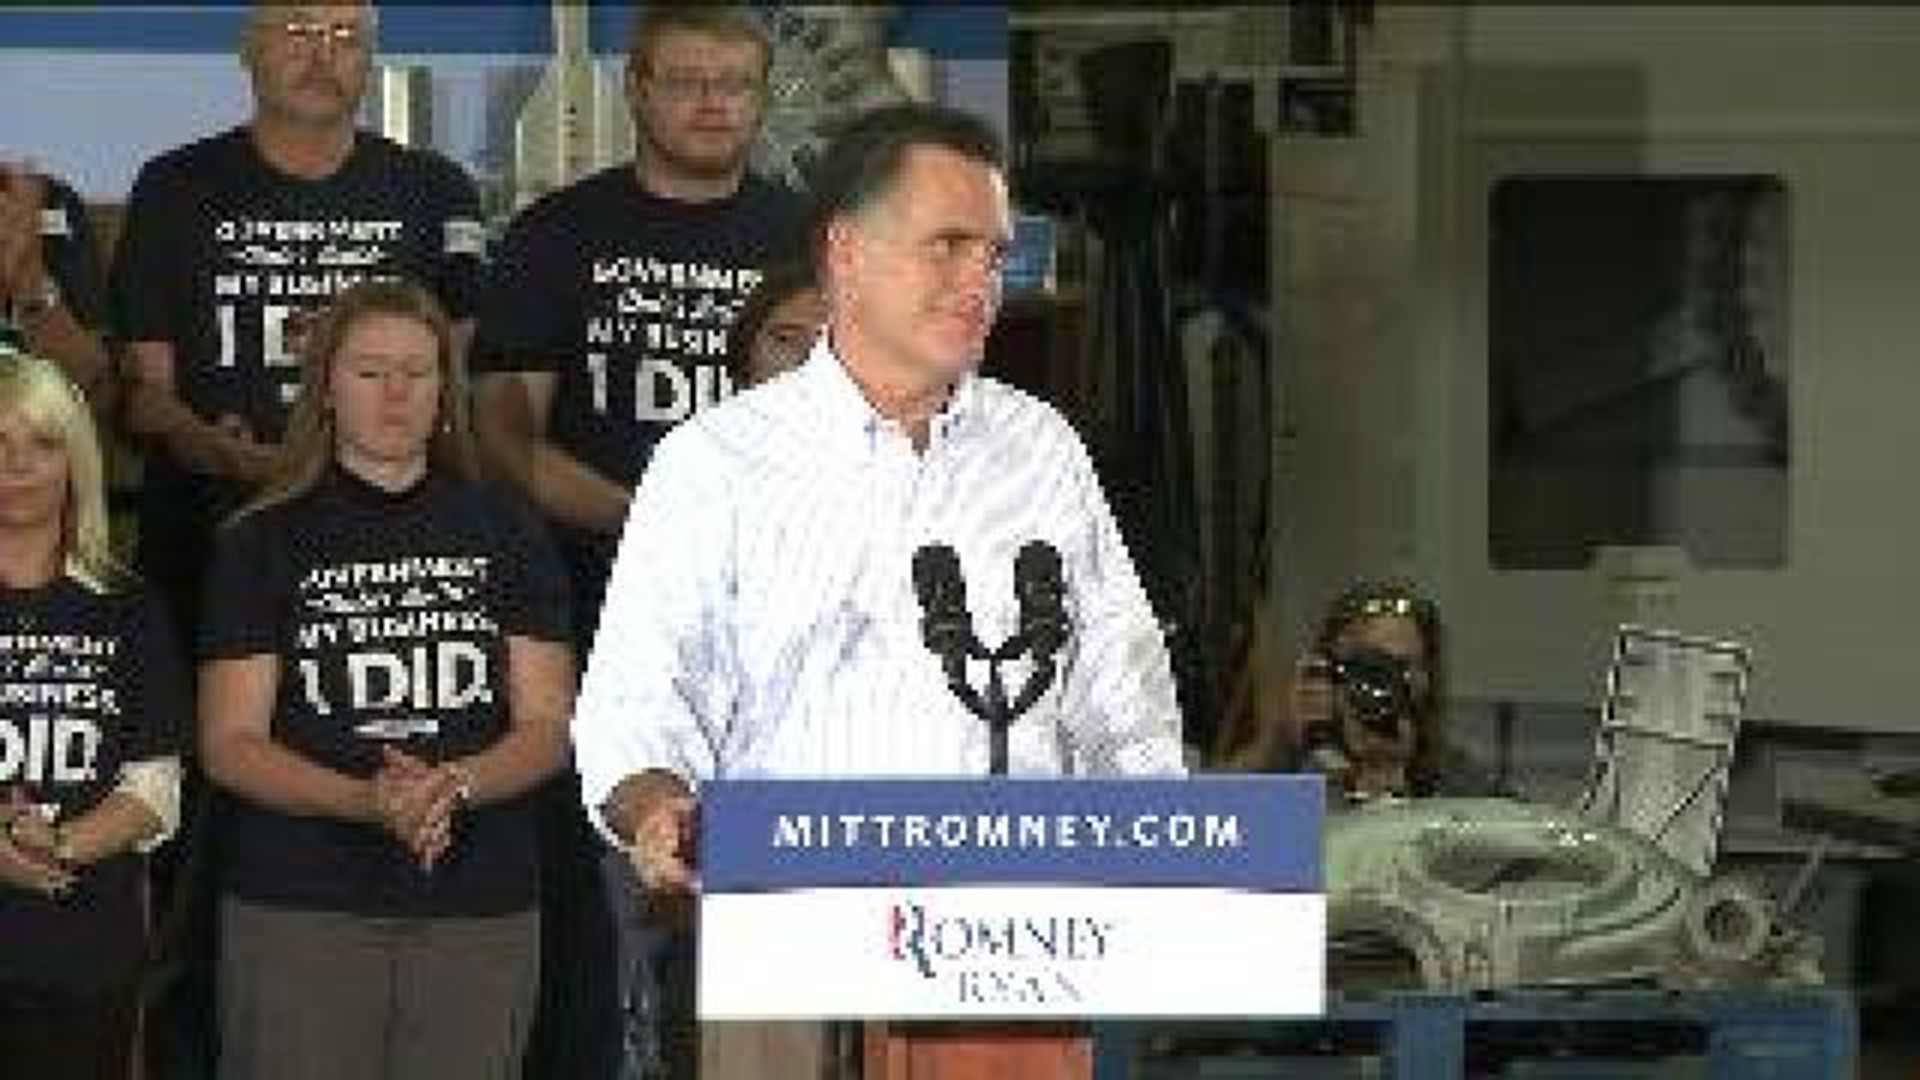 Mitt Romney in Bettendorf Clip 2 of 3